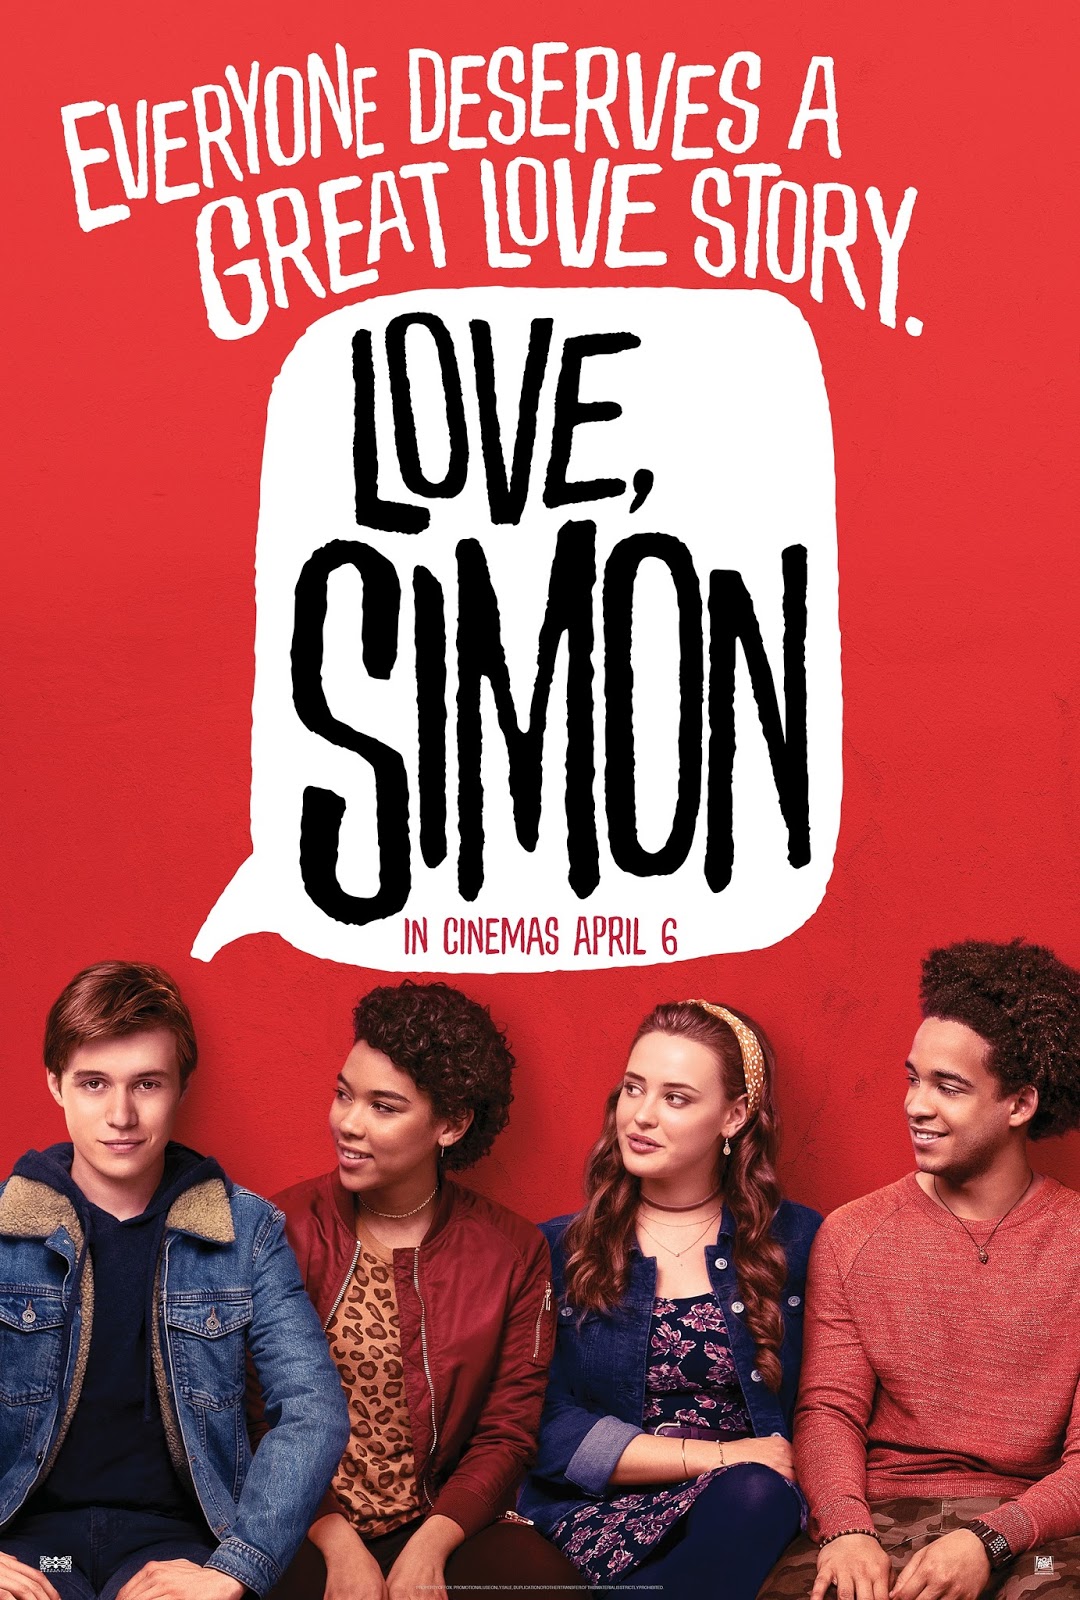 THE GIZZLE REVIEW: Love, Simon - Greg Berlanti